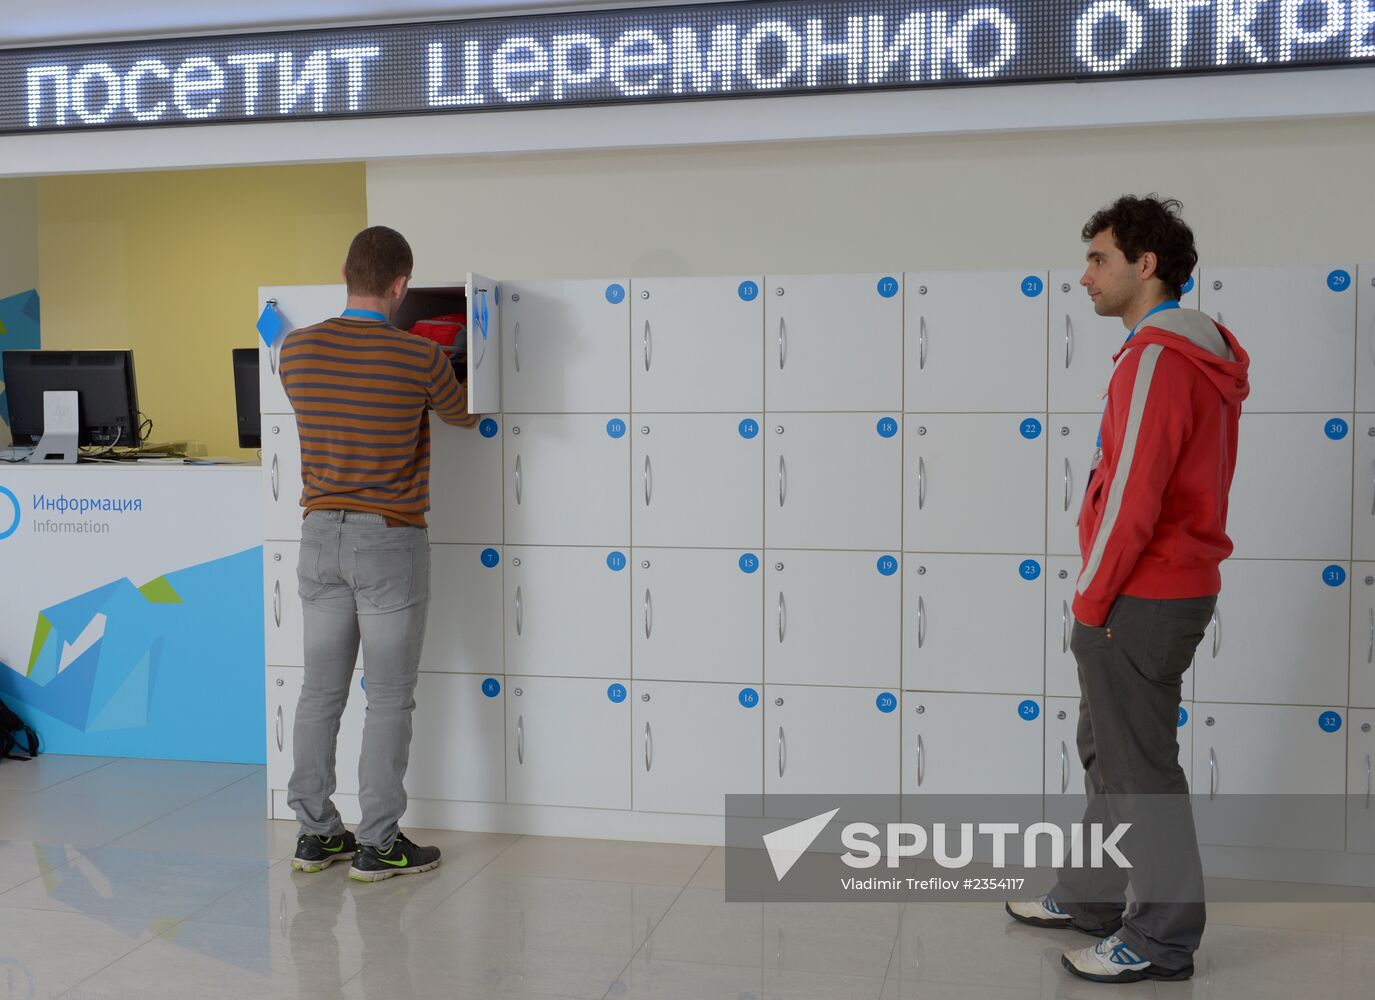 Nonaccredited media center for journalists in Sochi